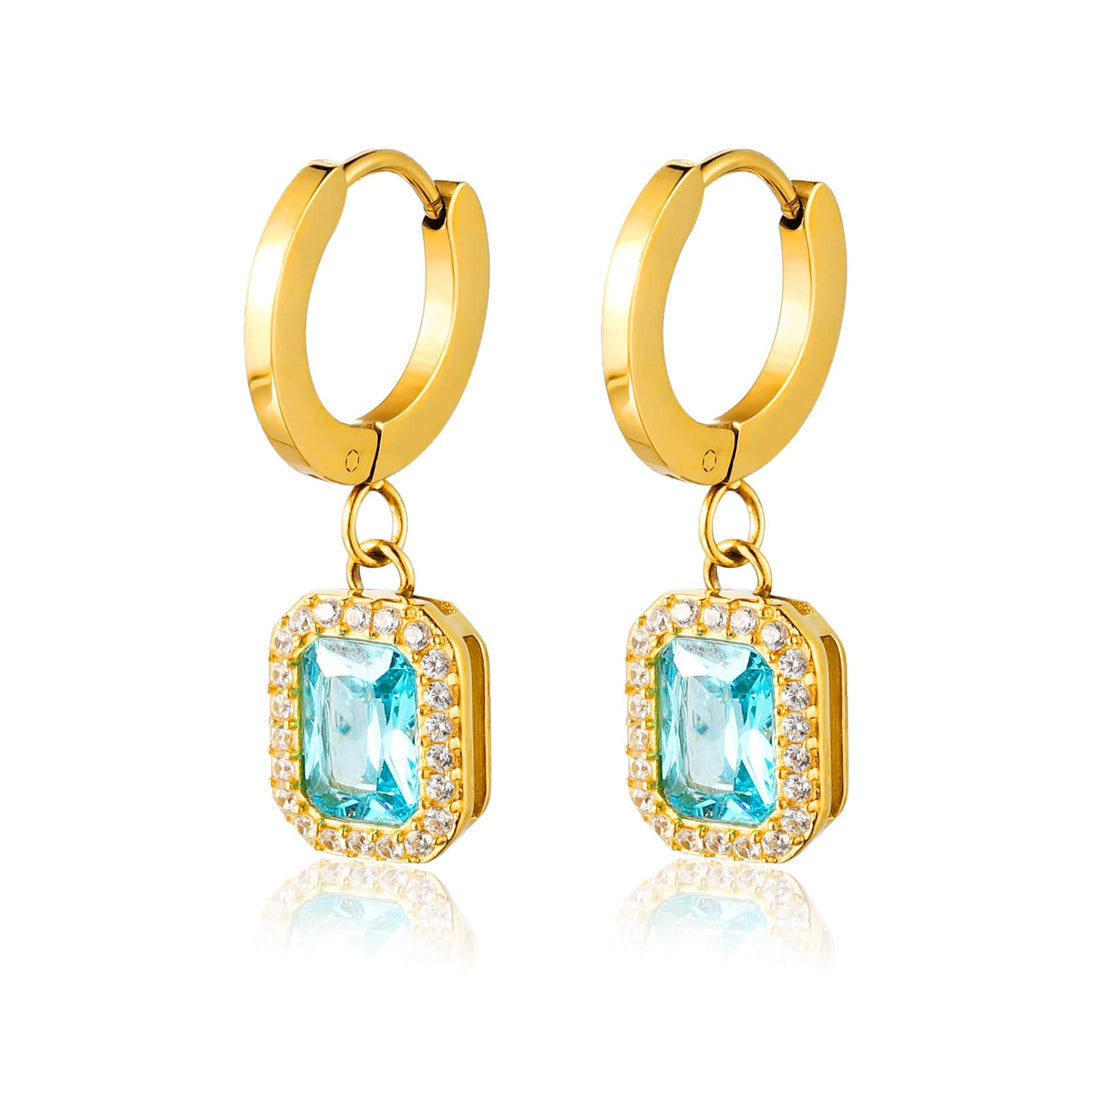 bianco rosso Earrings Aqua Gem Drop Earrings cyprus greece jewelry gift free shipping europe worldwide